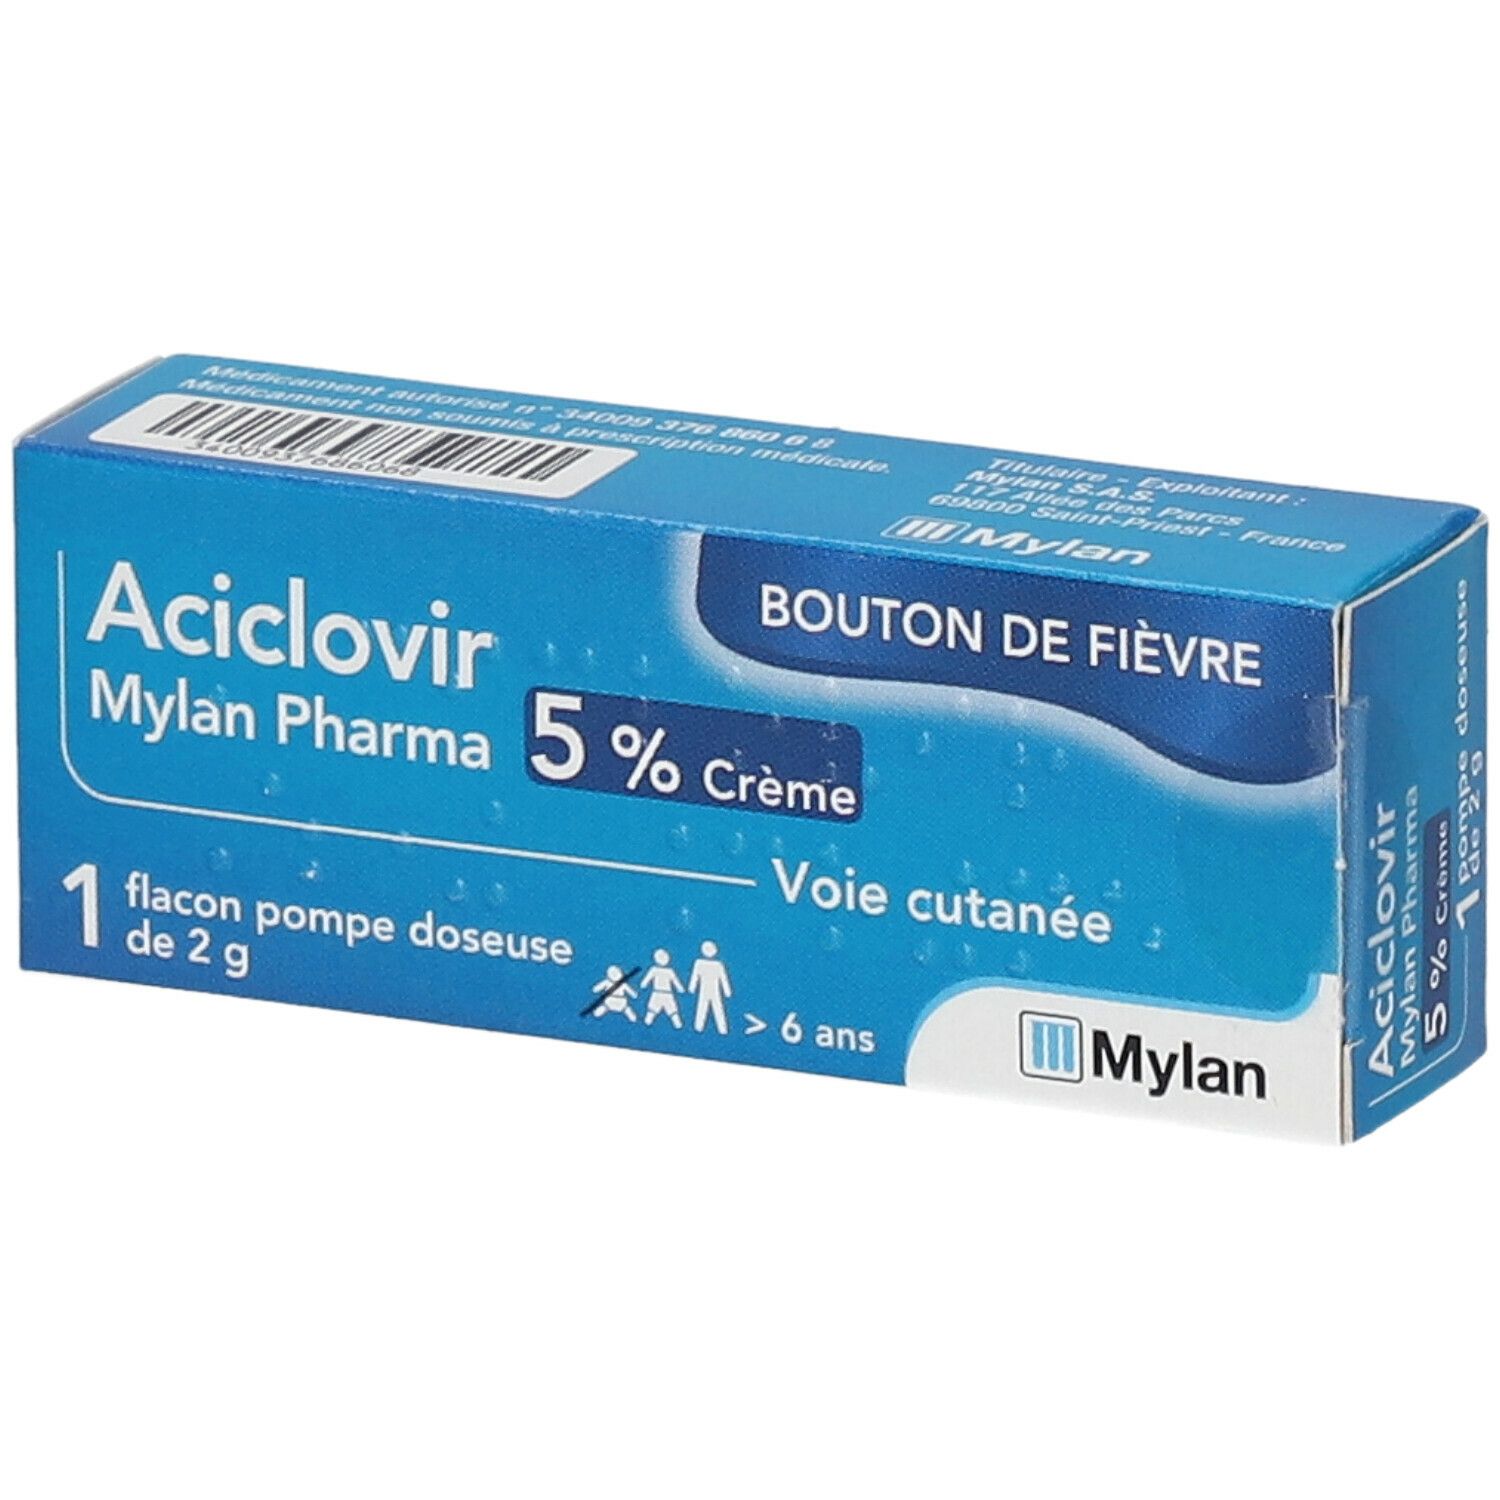 Aciclovir Mylan Pharma flacon-pompe crème 5 %